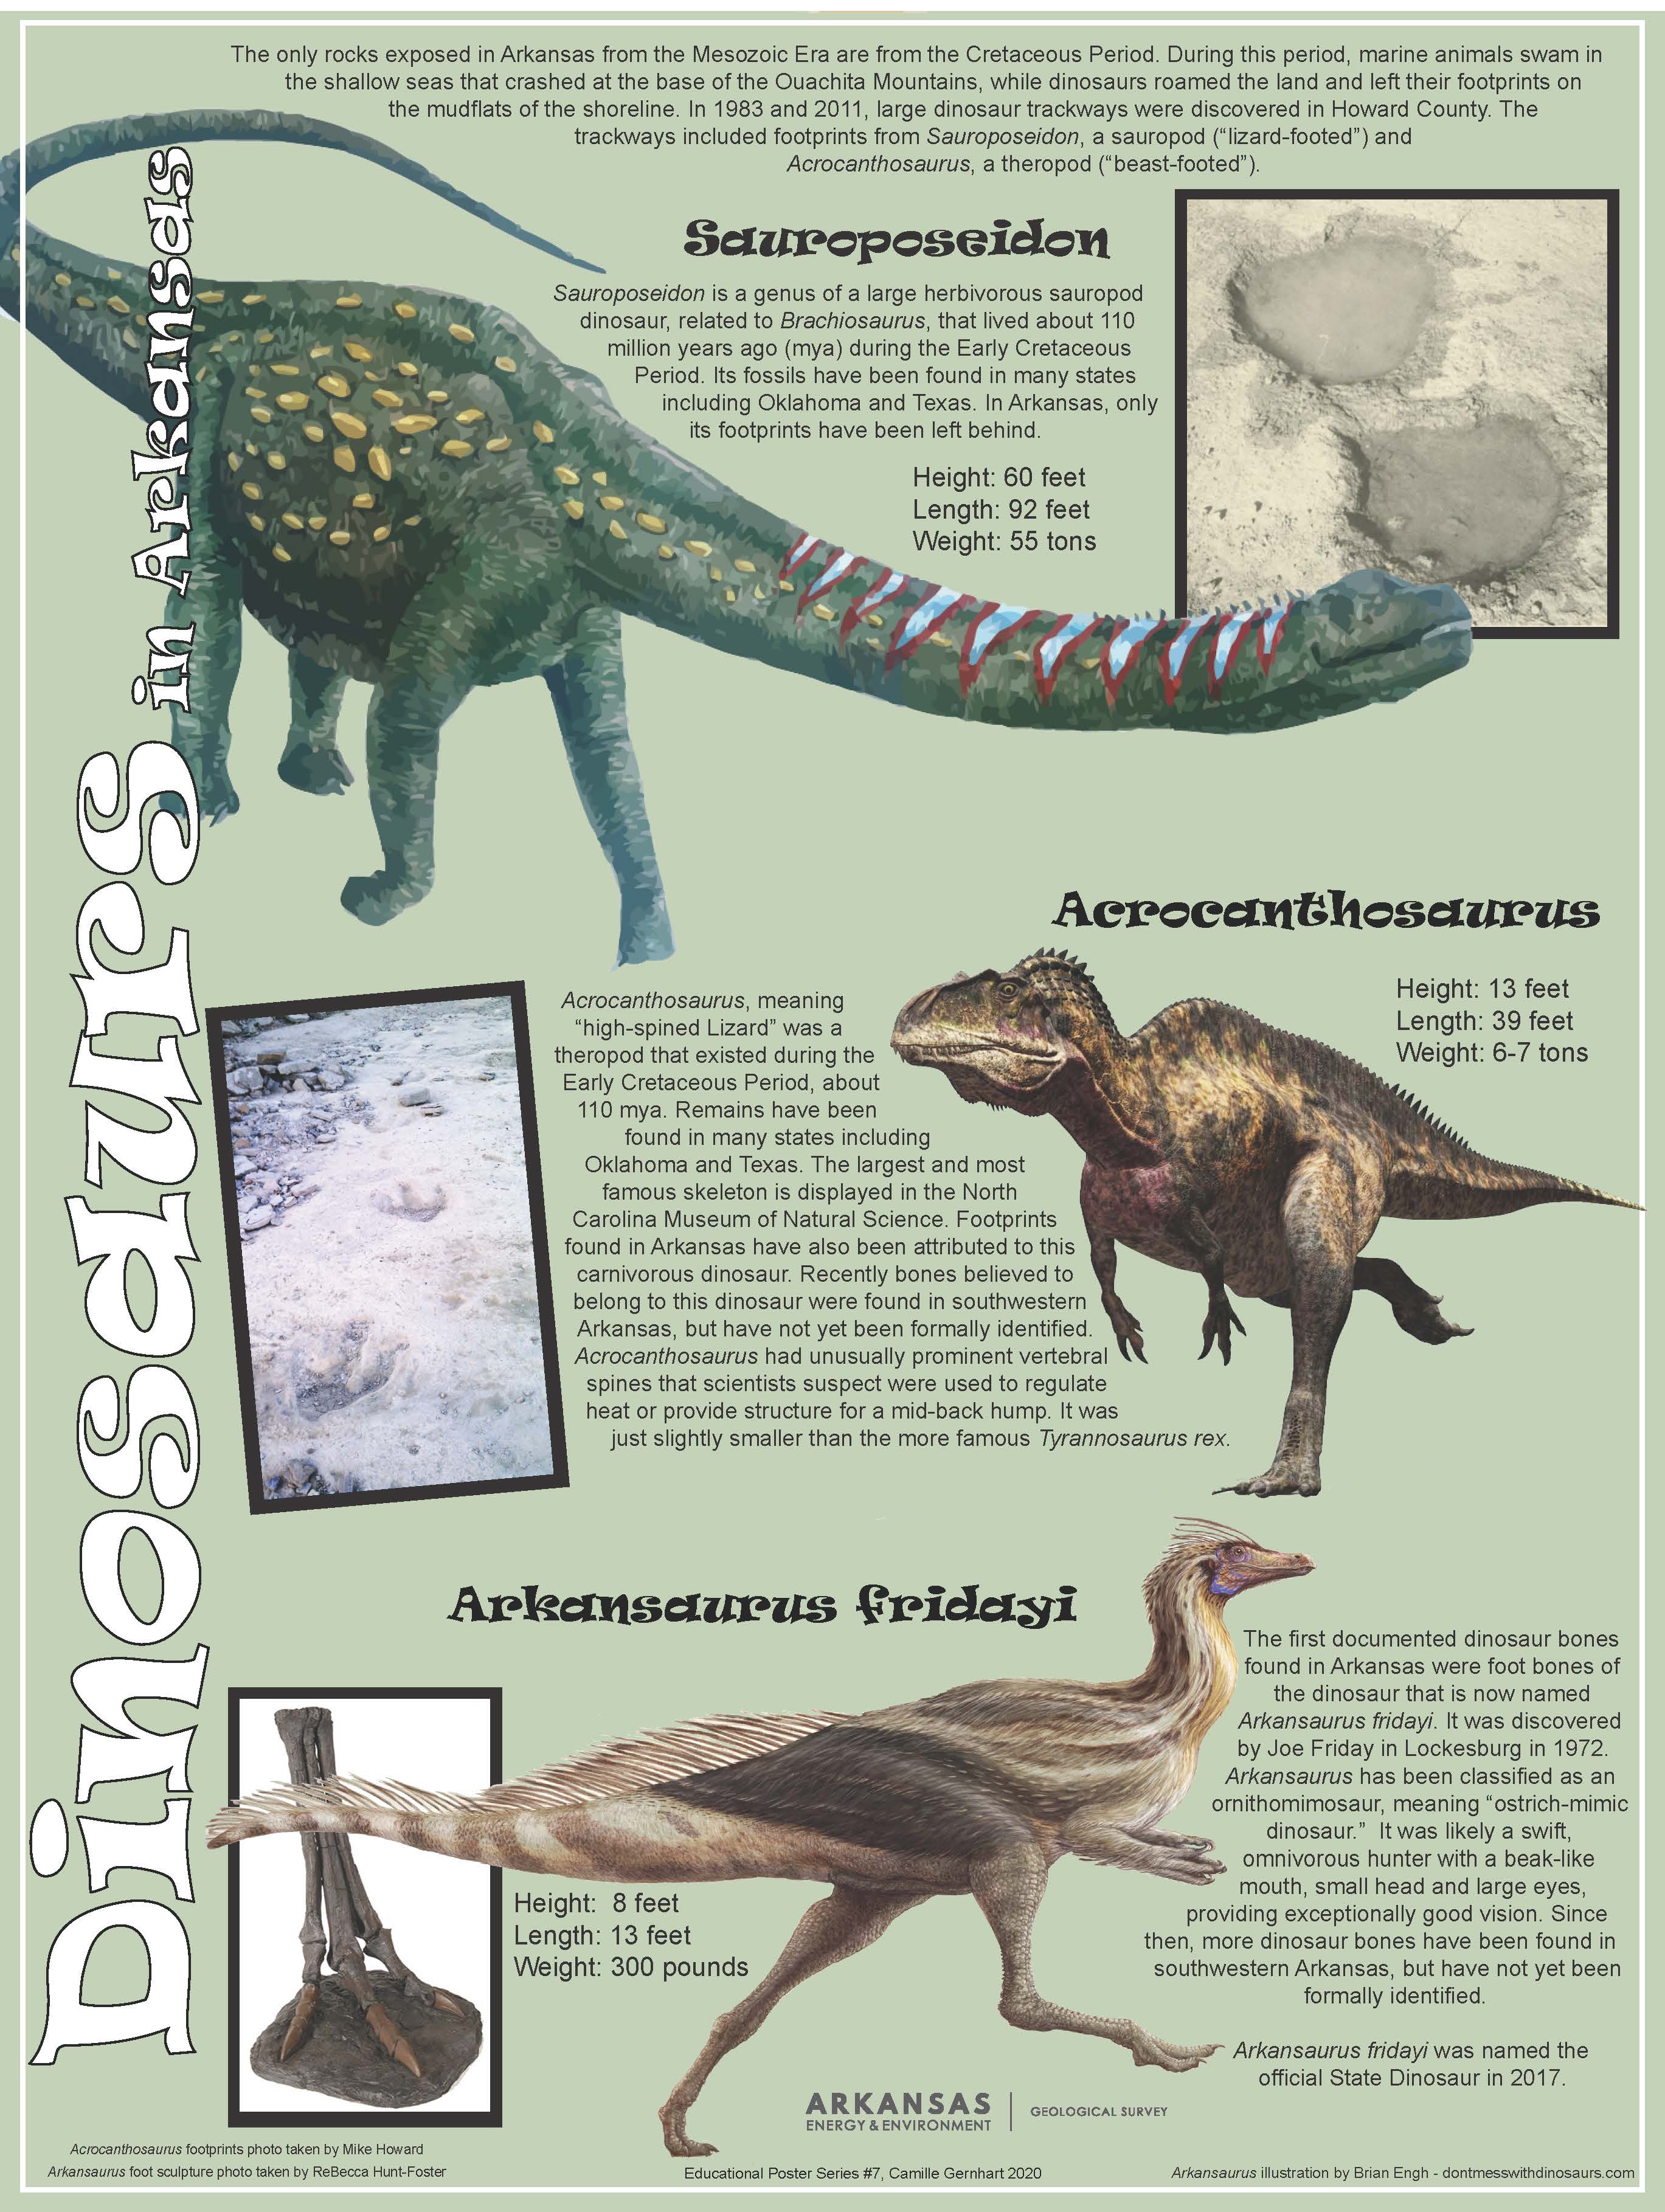 Dinosaurs in Arkansas Poster 2020